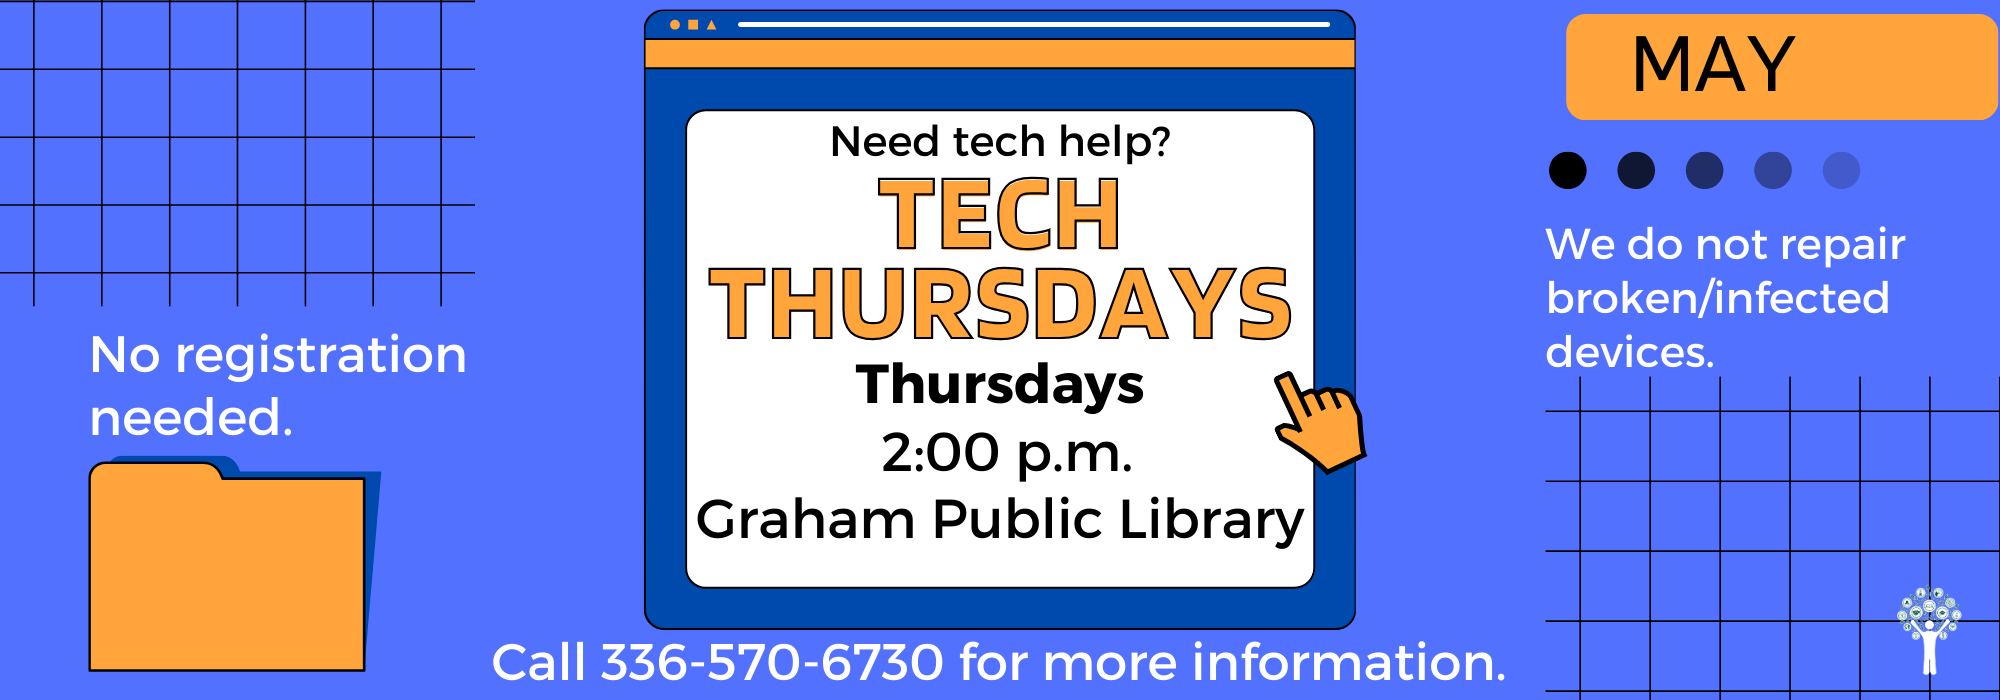 Thursdays at 2 pm - Tech Thursdays at Graham